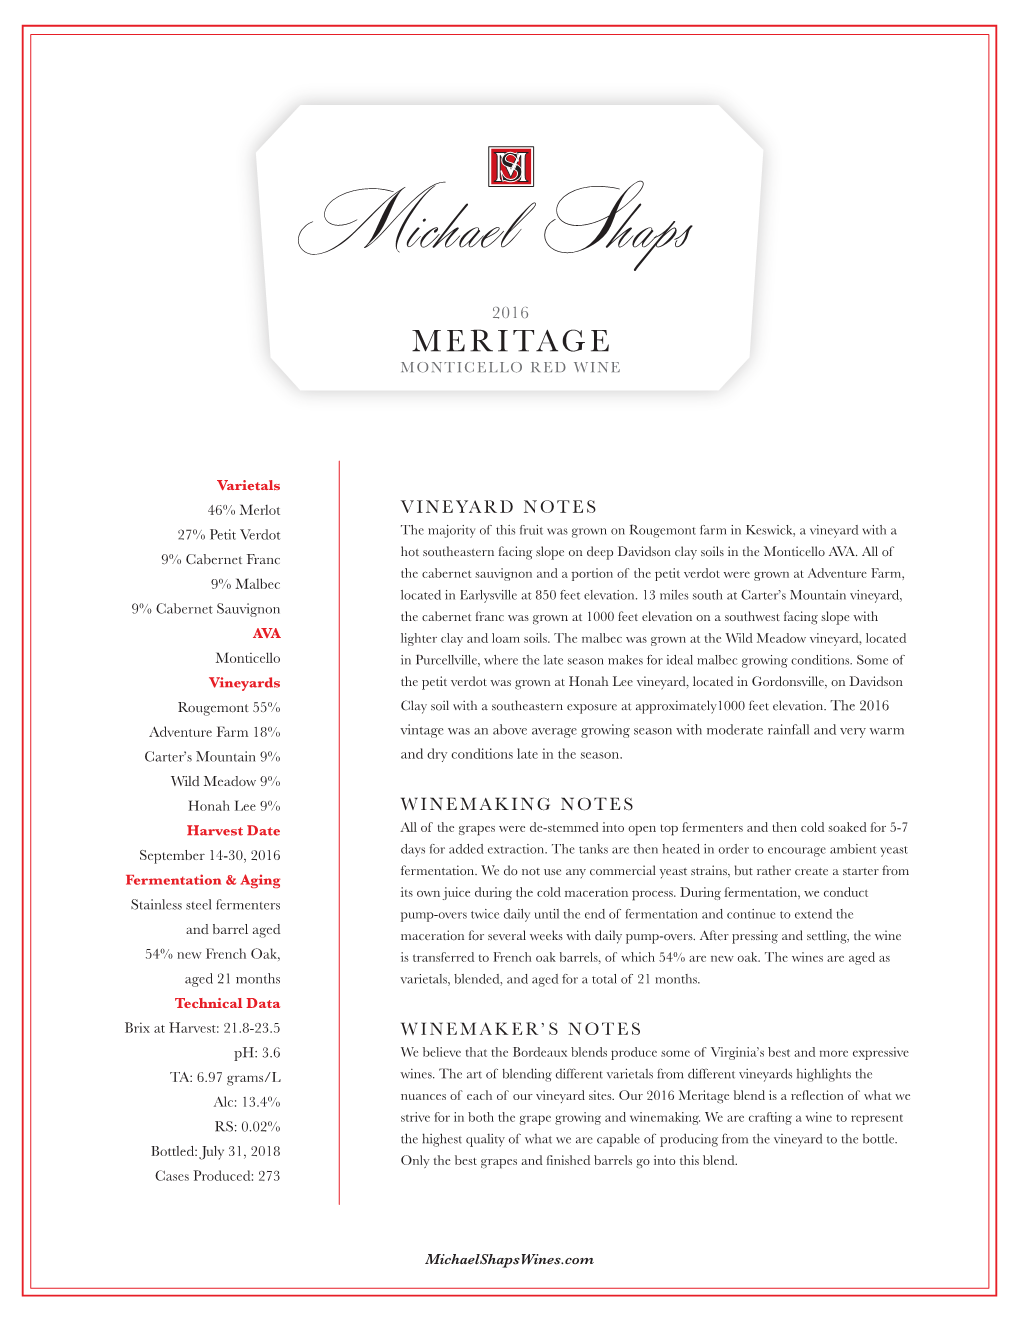 Meritage Monticello Red Wine